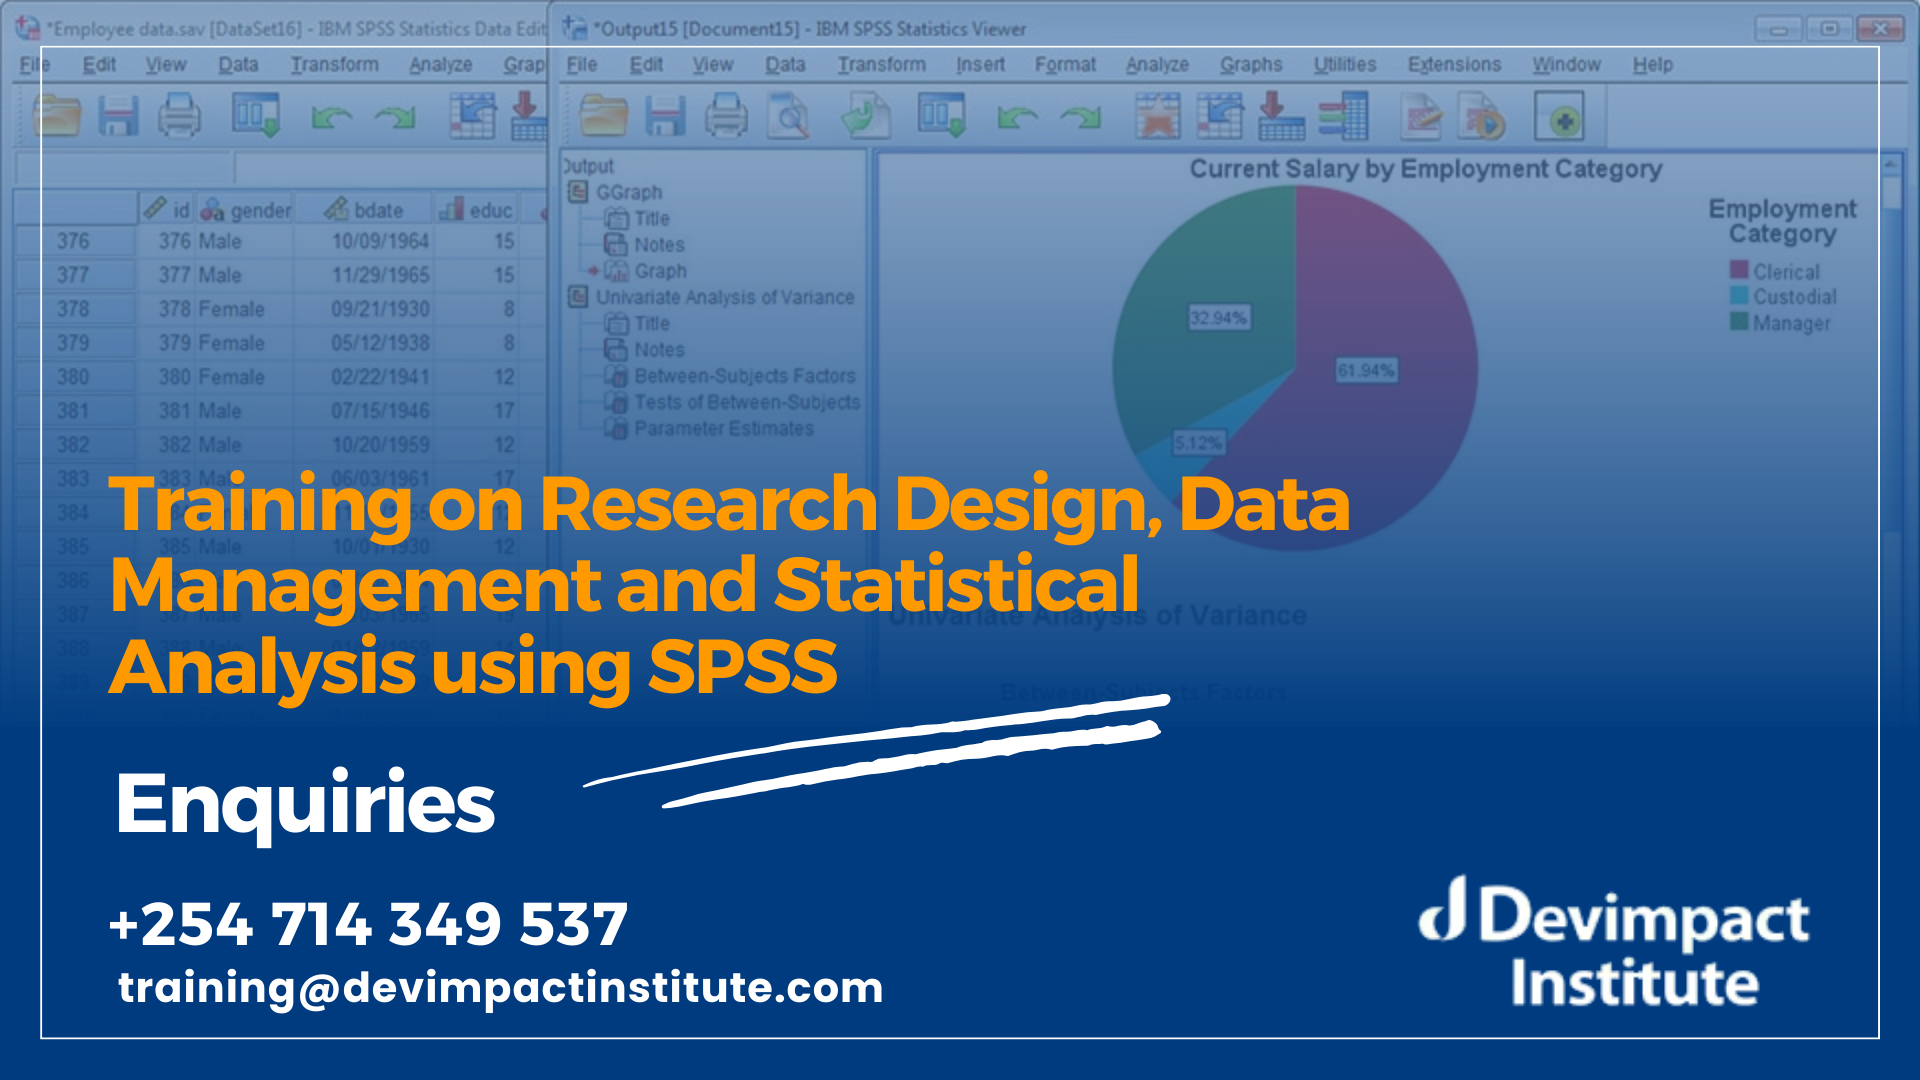 Research Design, Data Management and Statistical Analysis using SPSS, Devimpact Institute, Nairobi, Kenya